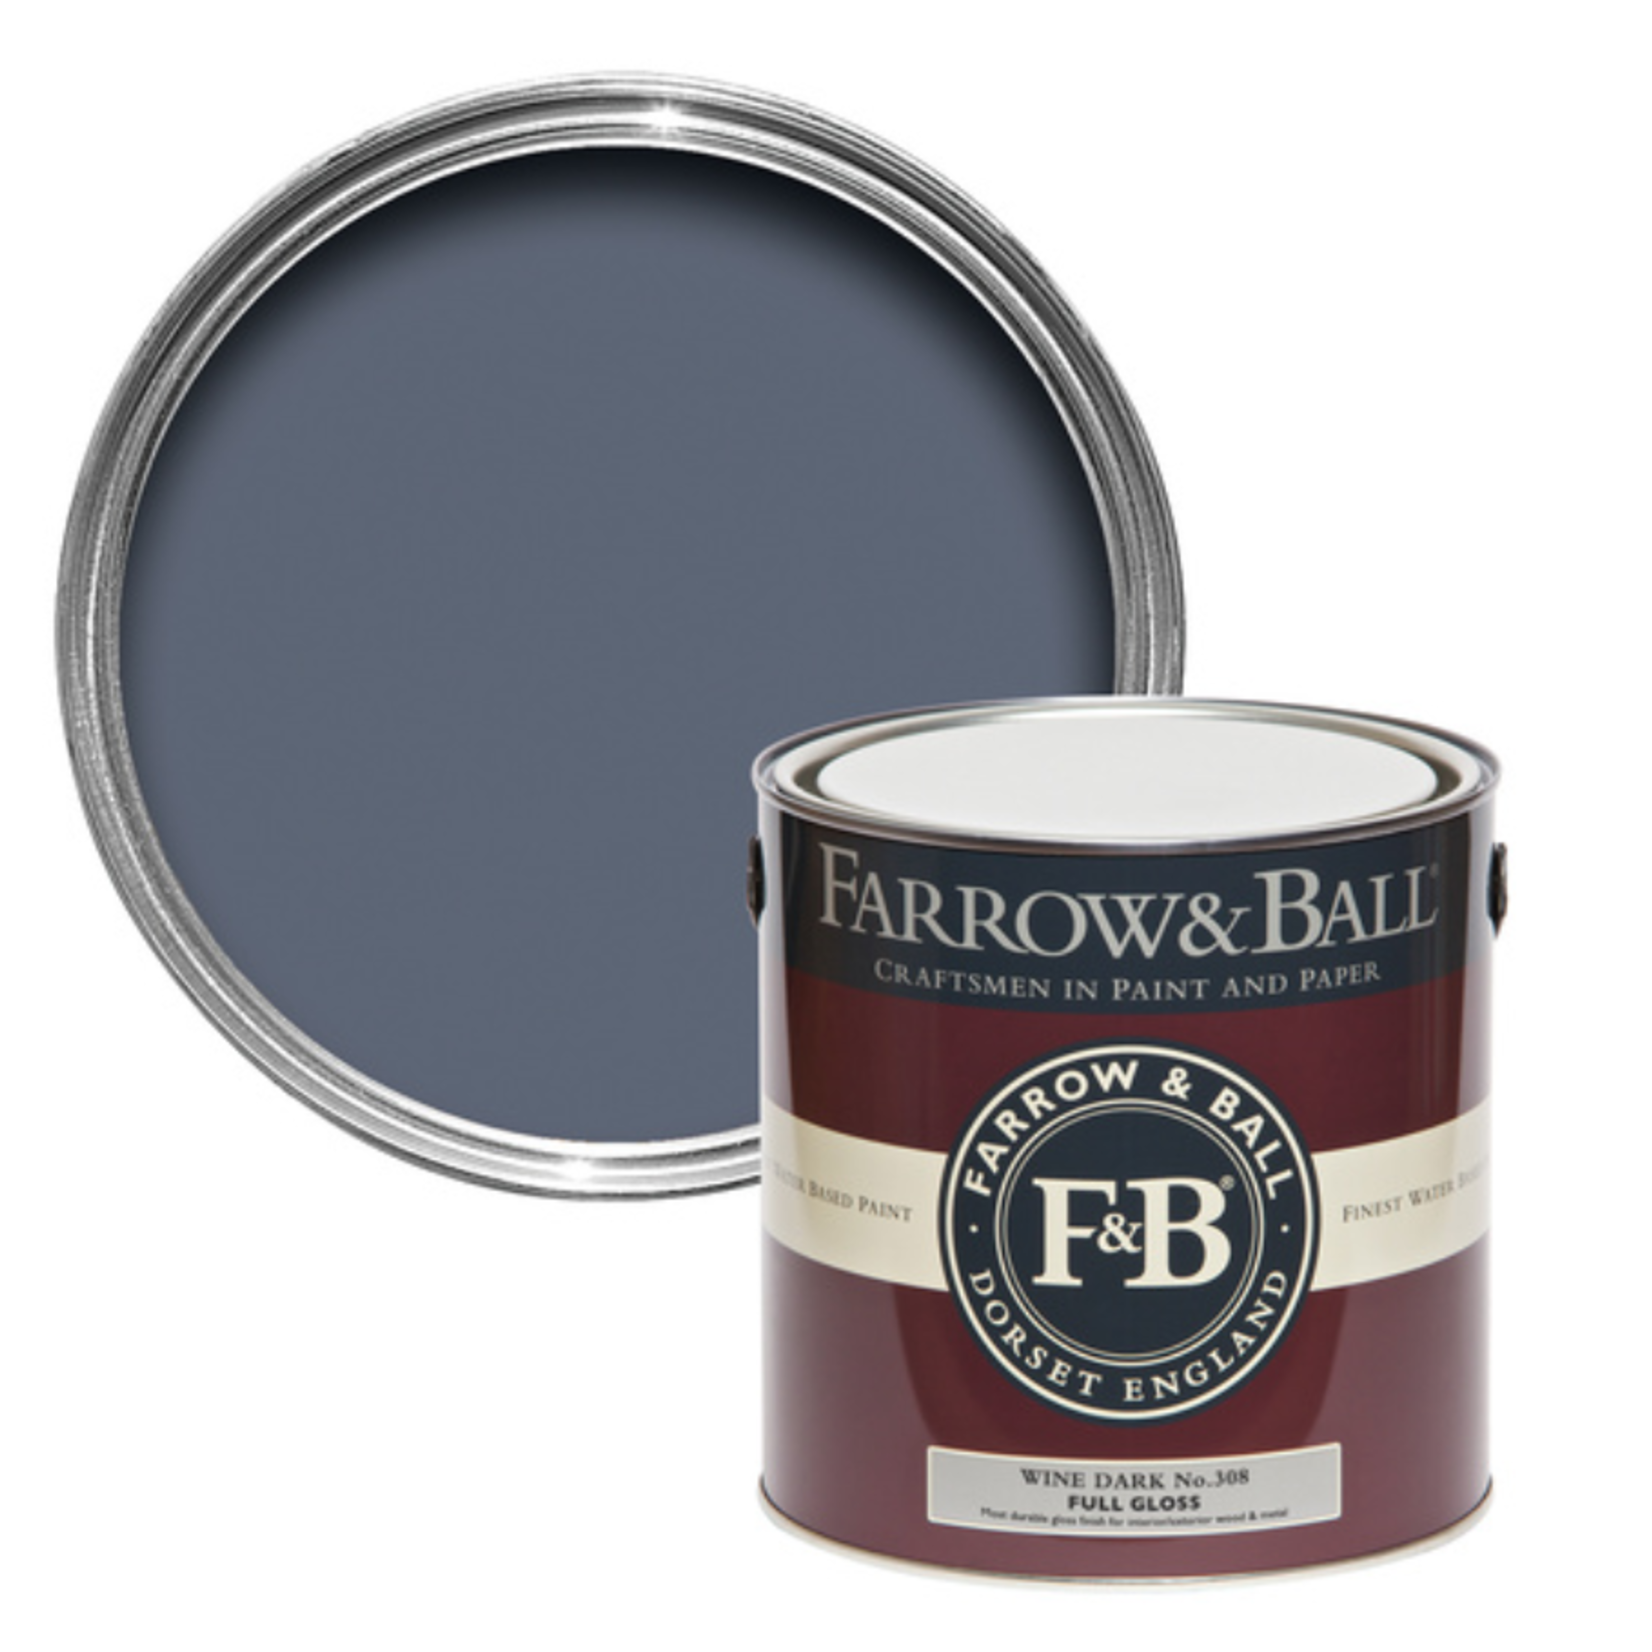 Farrow and Ball Gallon Full Gloss Wine Dark No.308